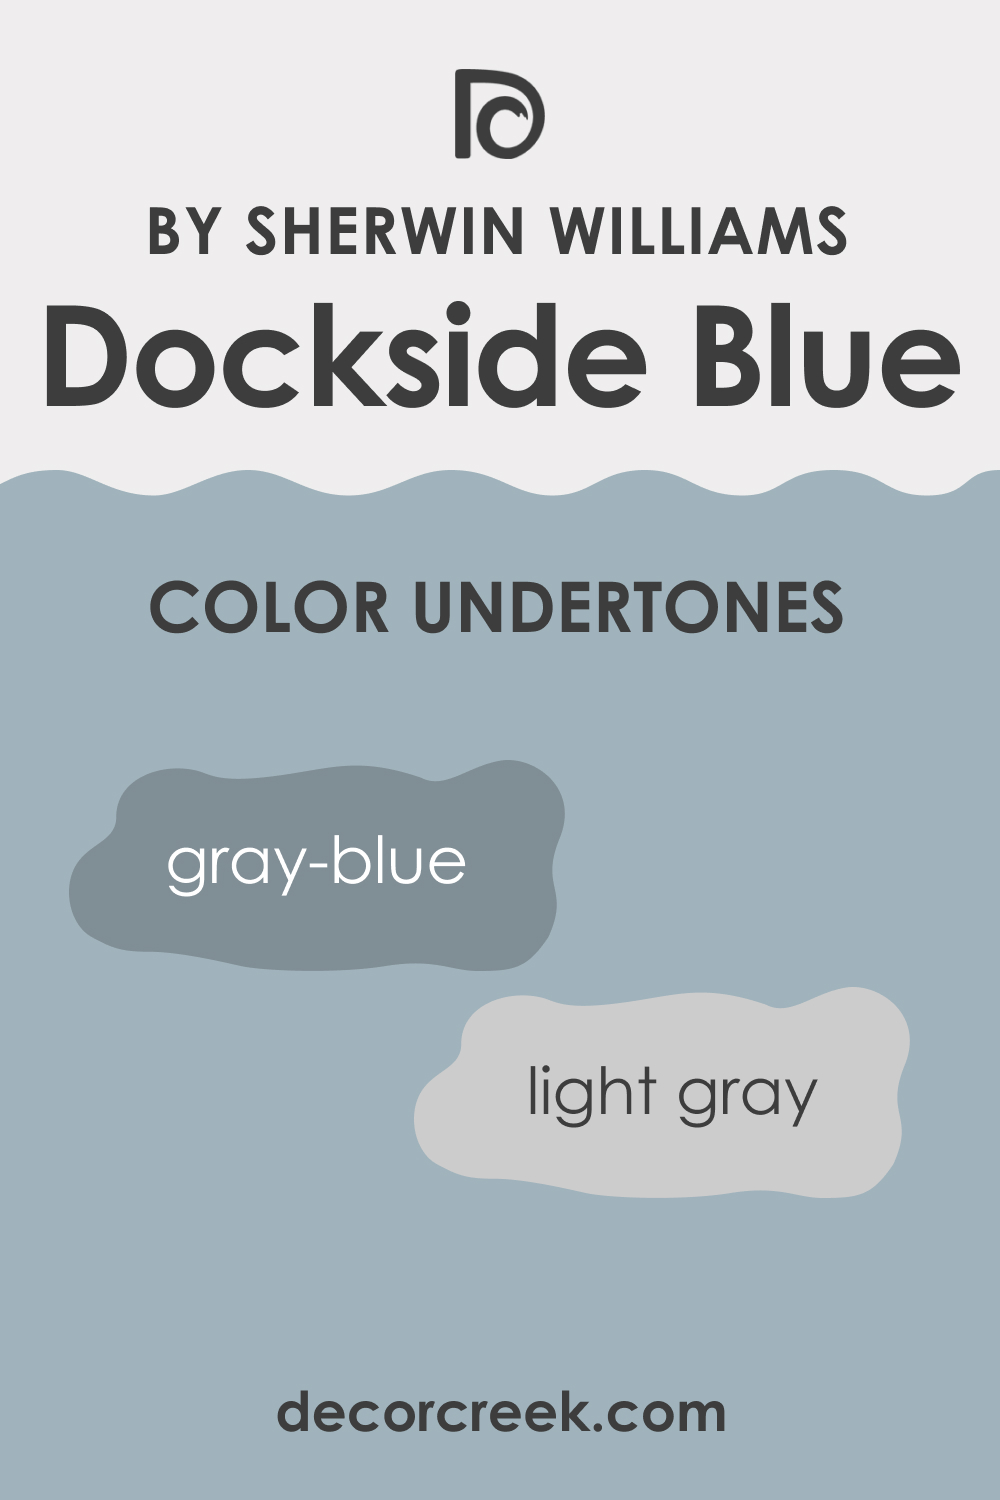 What Undertones Does Dockside Blue SW 7601 Have?